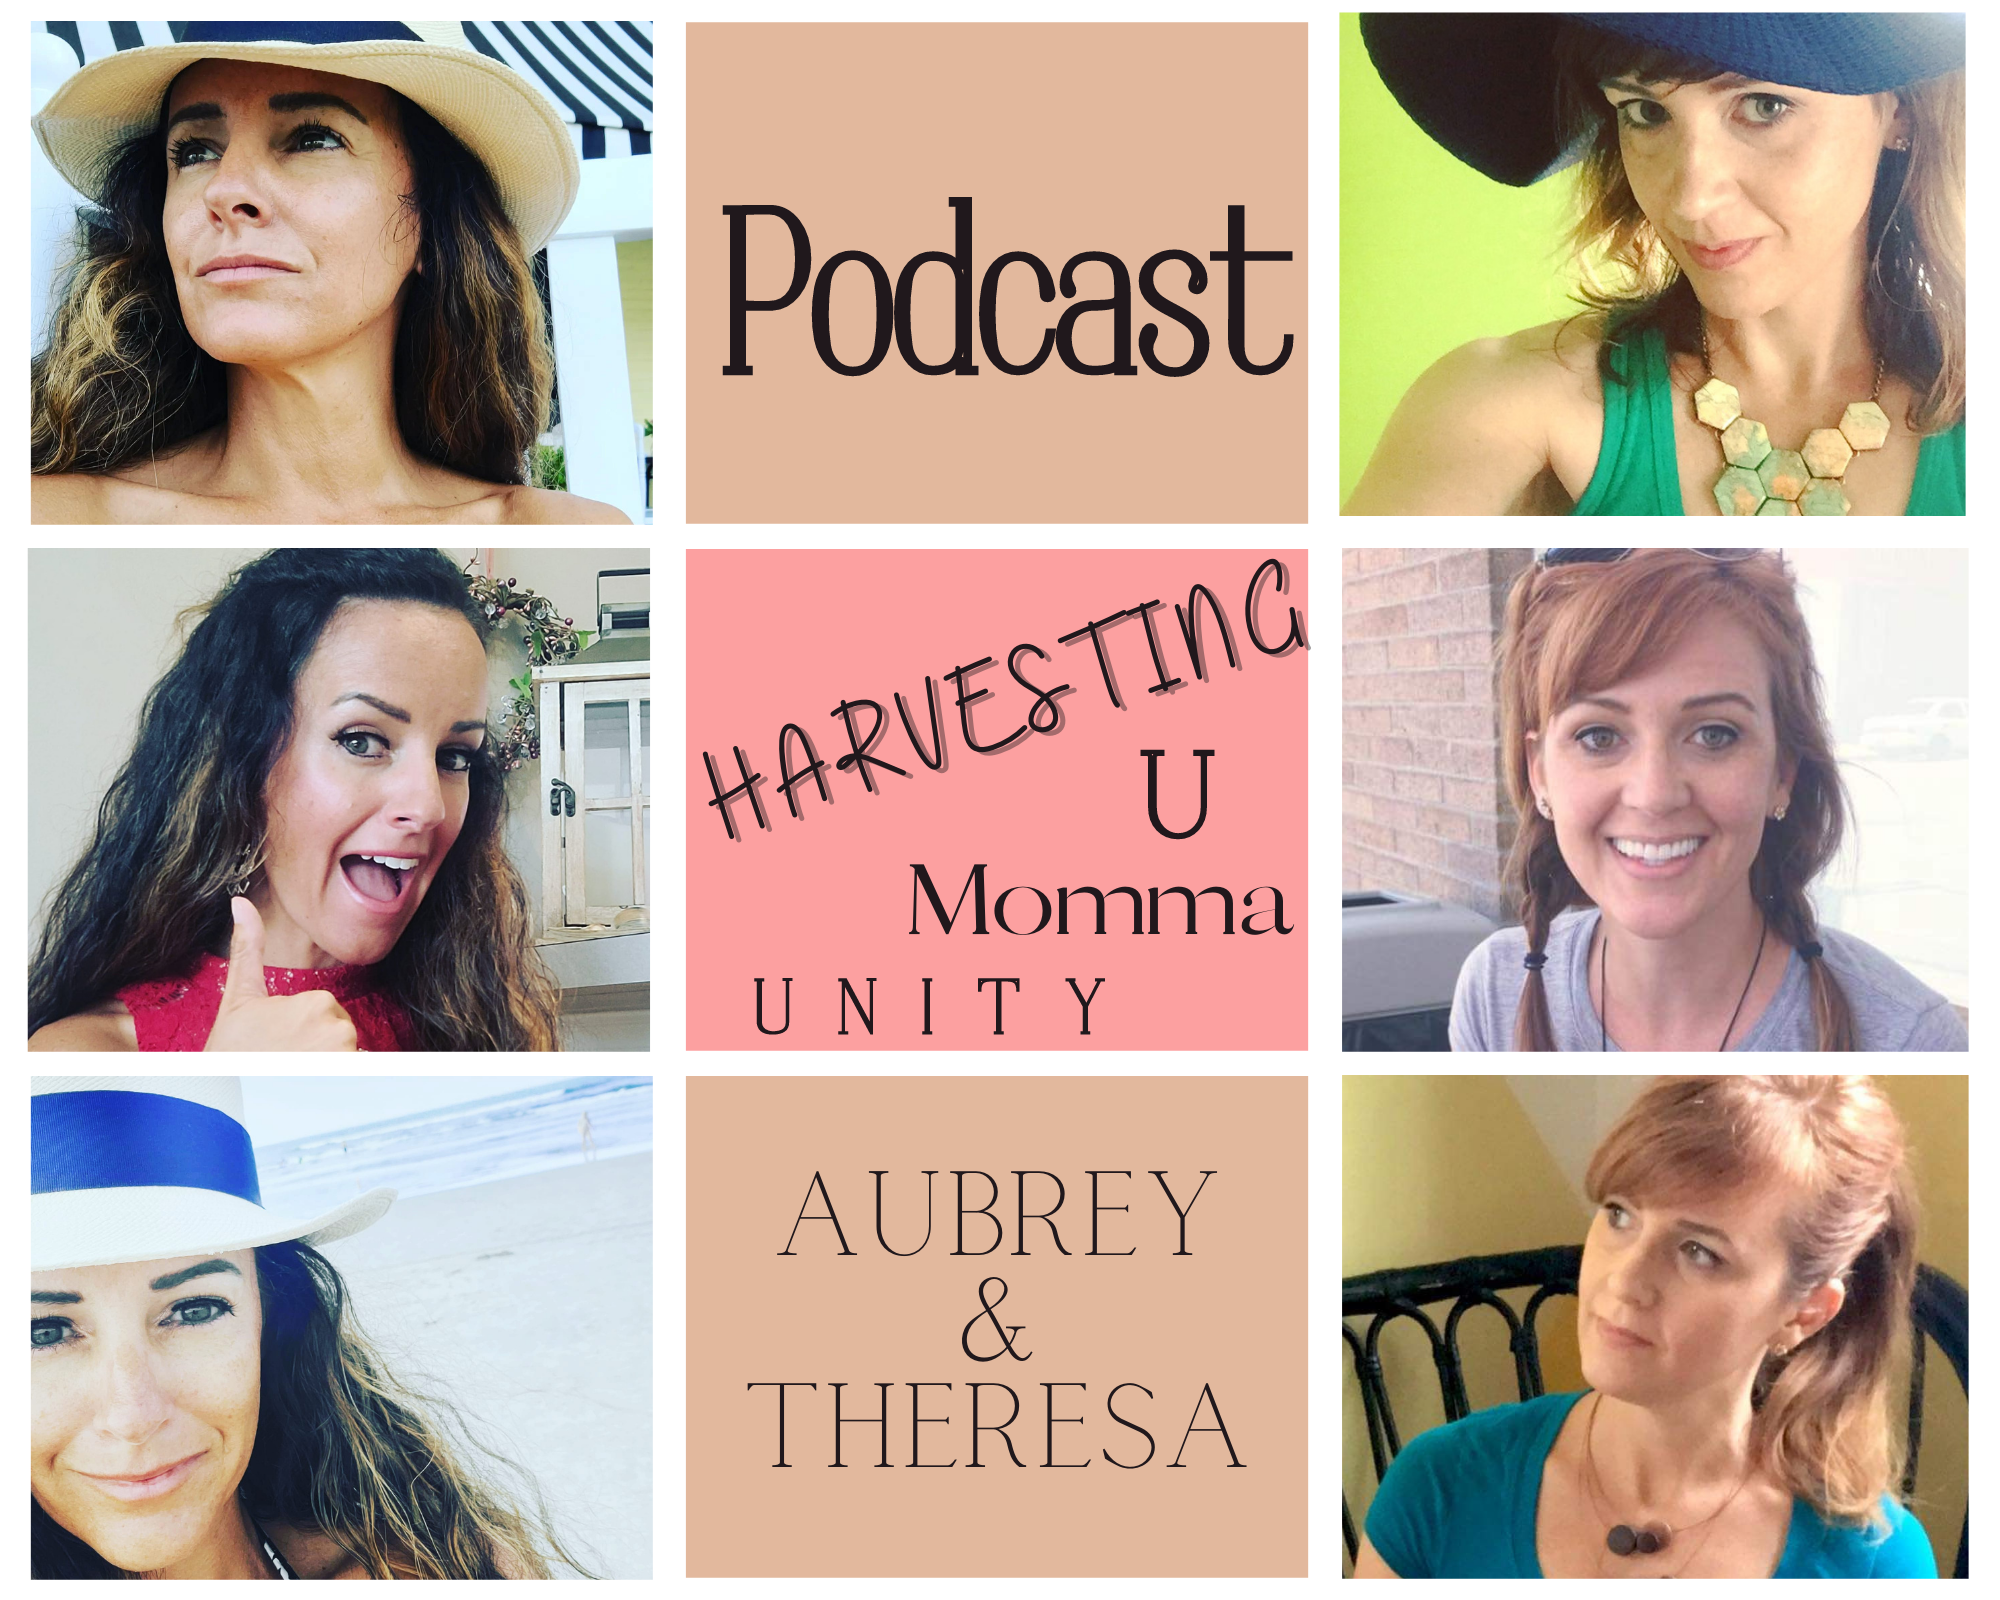 Aubrey-Theresa-Harvesting-U-podcast-momma-unity